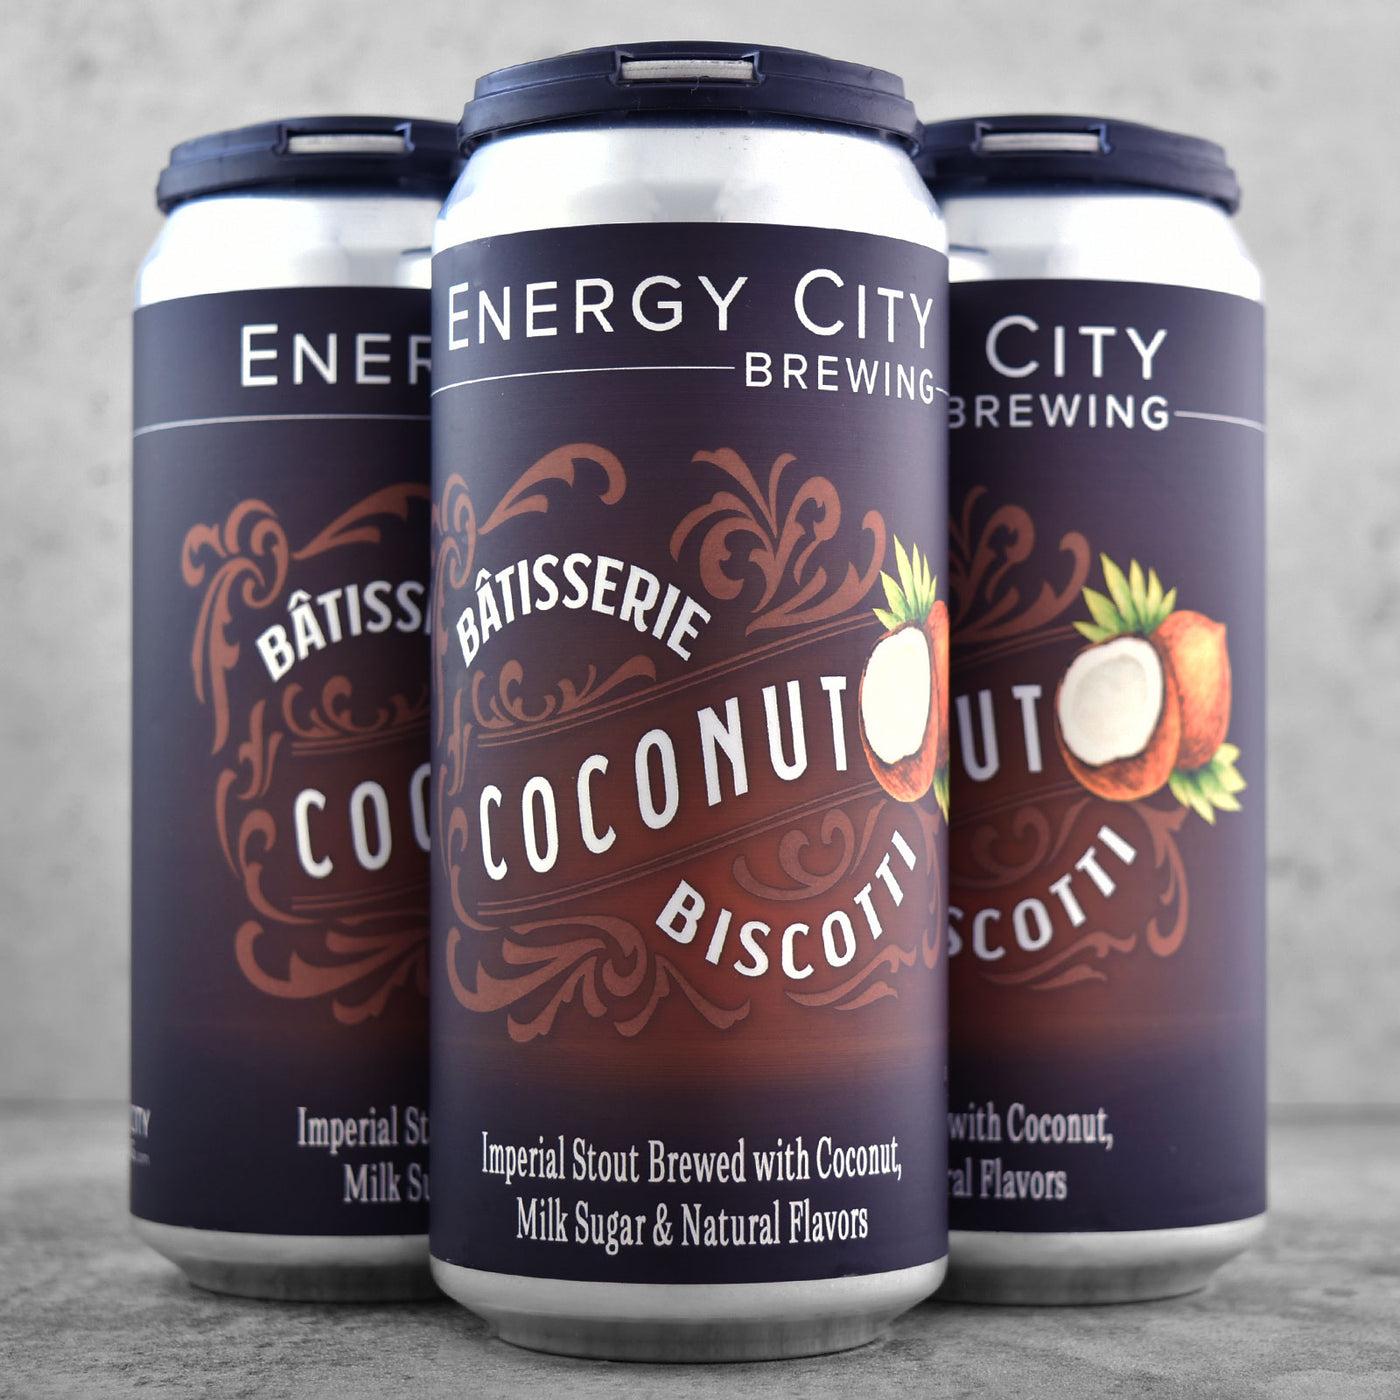 Energy City Batisserie Coconut Biscotti